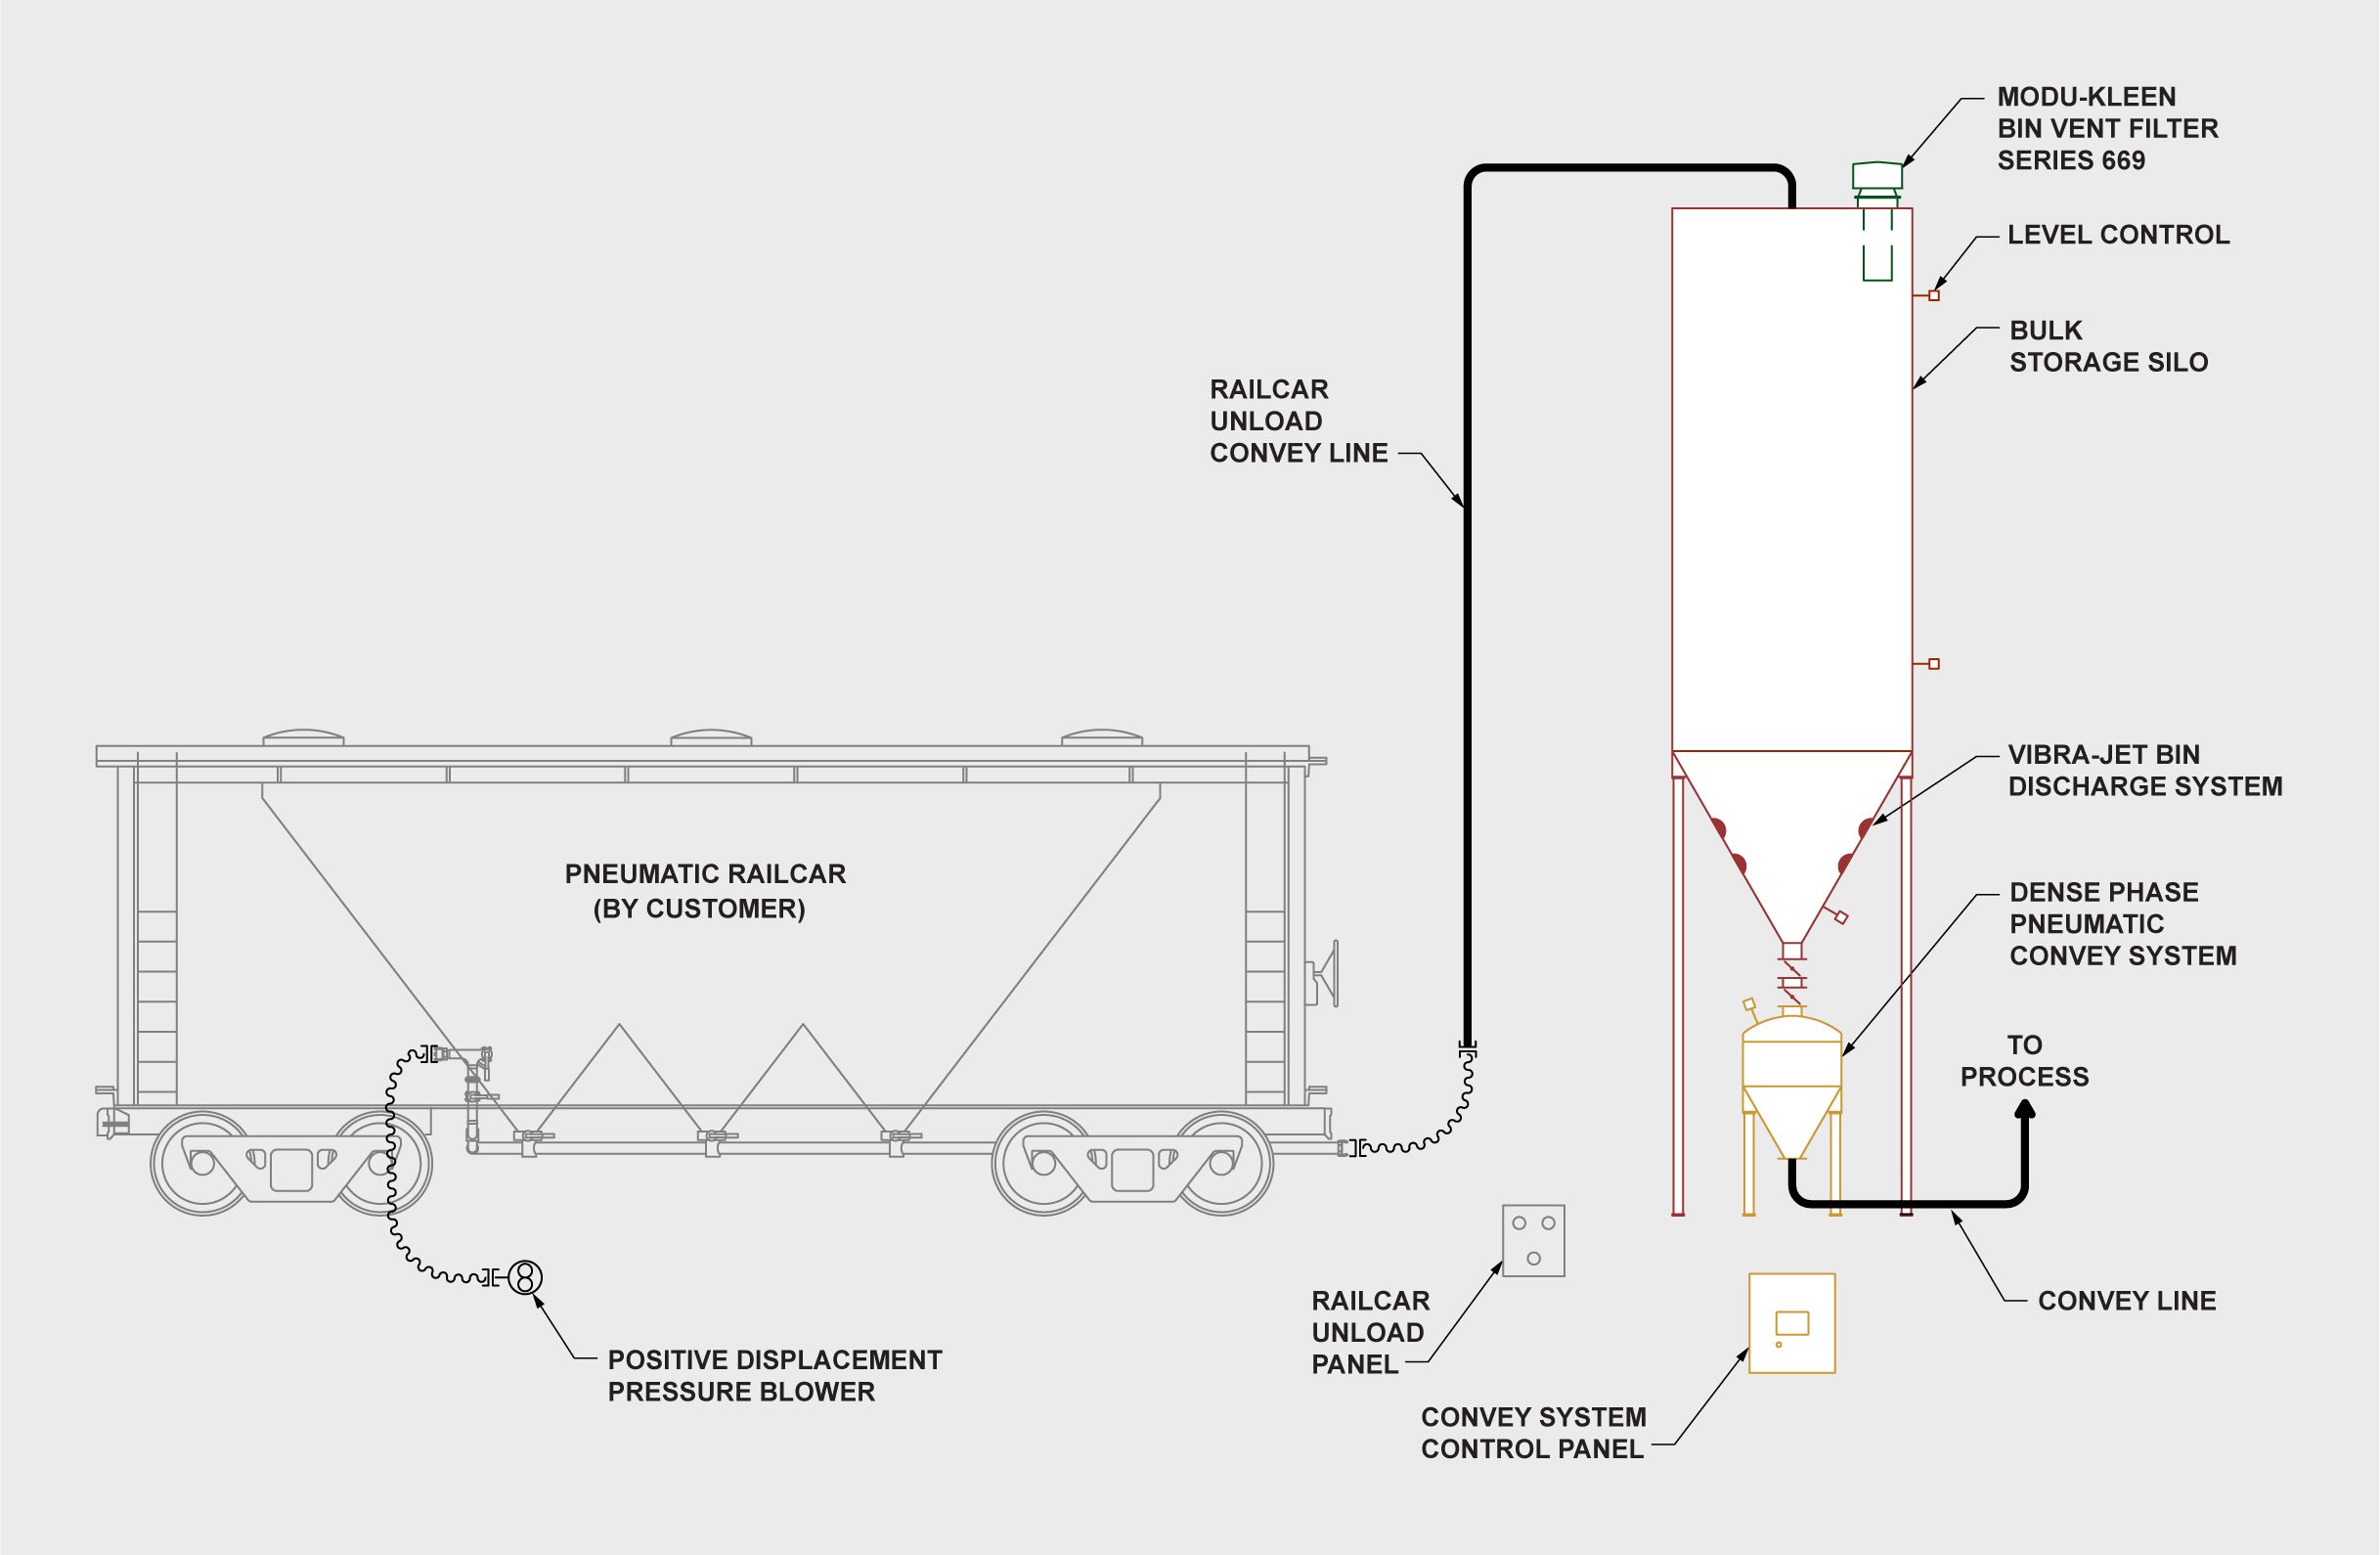 Raw Material Receiving System - Pneumatic Railcar